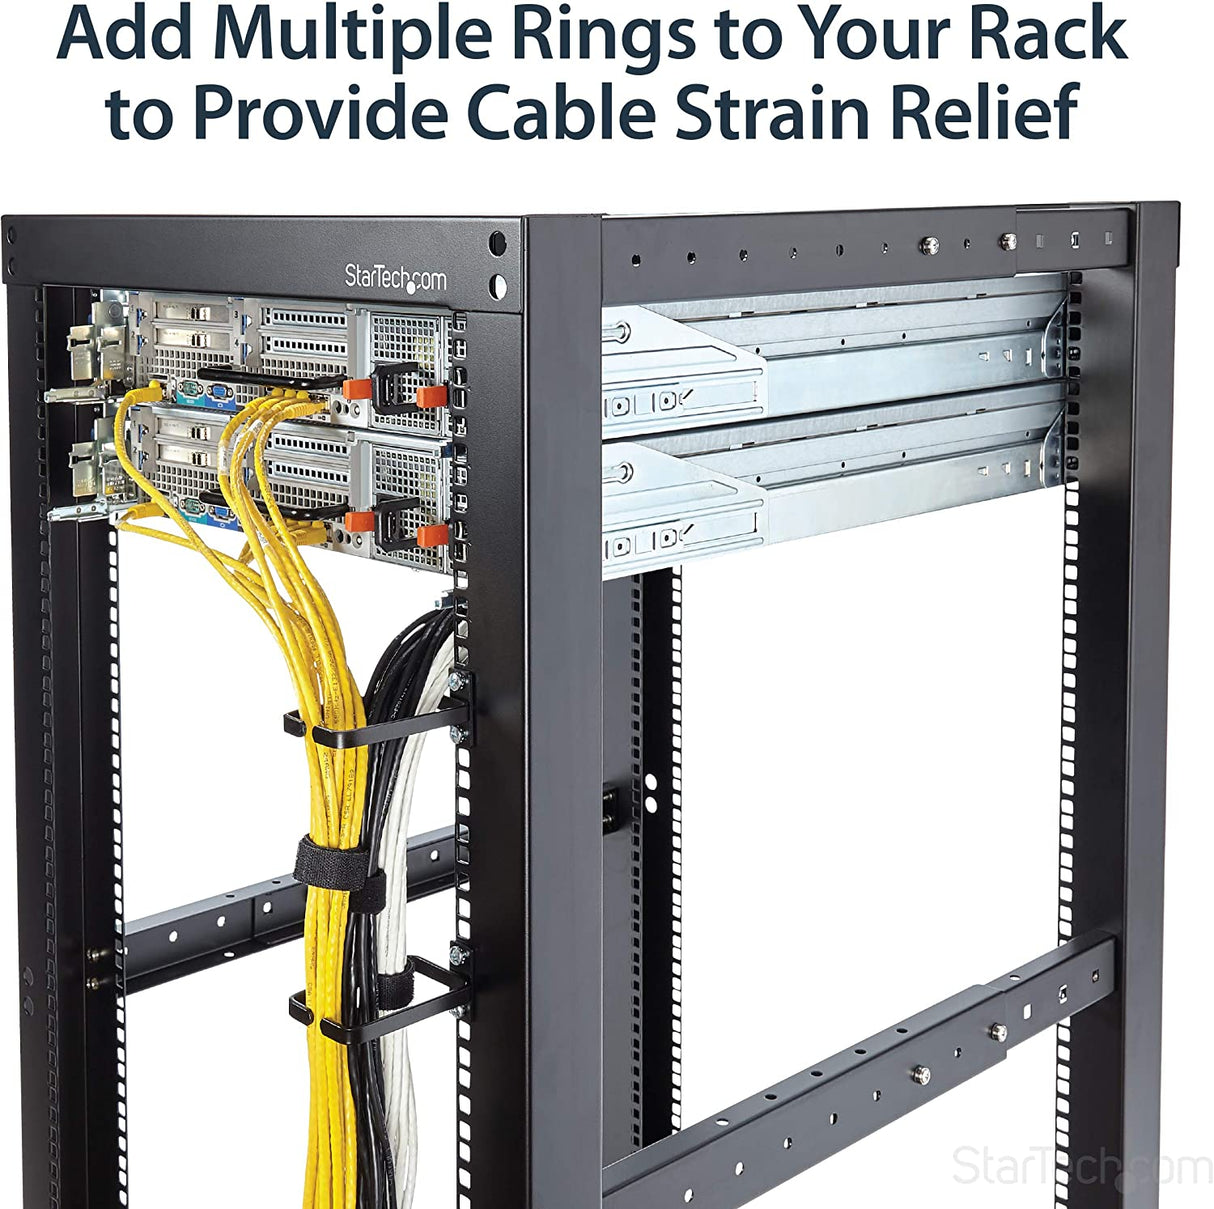 StarTech.com 1U Vertical 2.2 x 3.9in Server Rack Cable Management D-Ring Hook w/ Flexible Opening - Network Rack-Mount Cord Organizer Ring (CMHOOK1U),Black